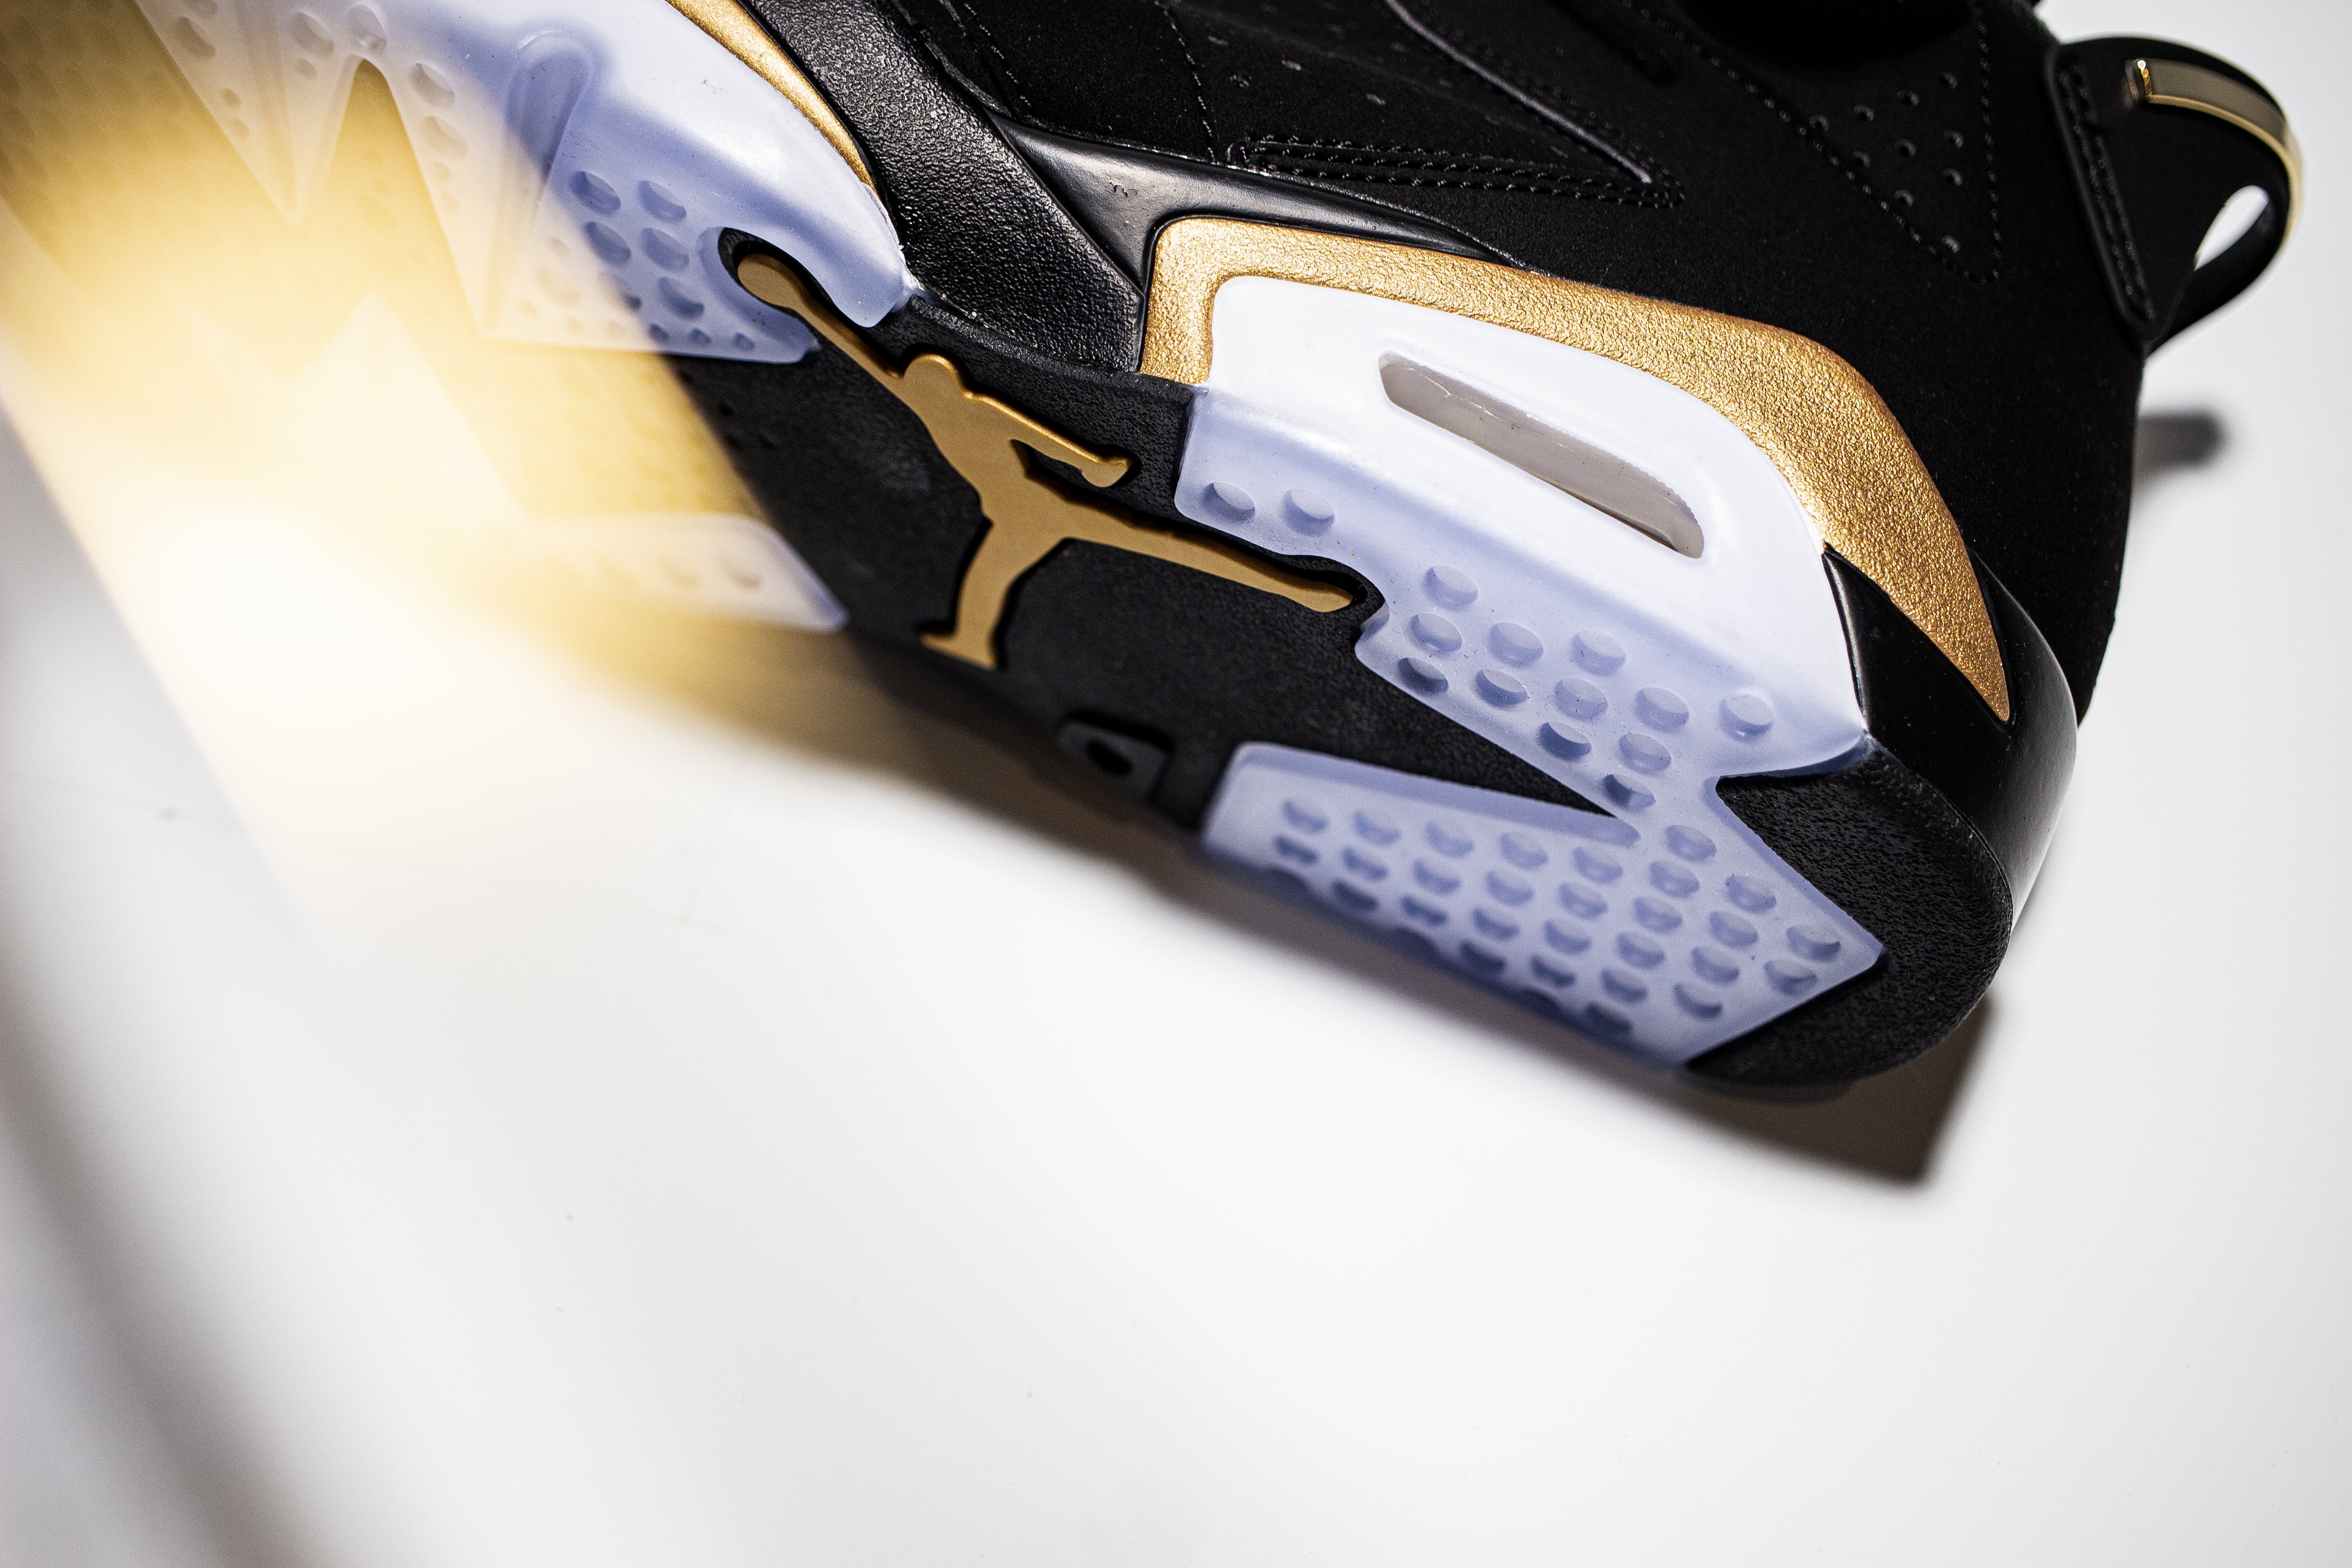 Midsole angle view of Jordan 6 black gold sneaker highlighting the logo